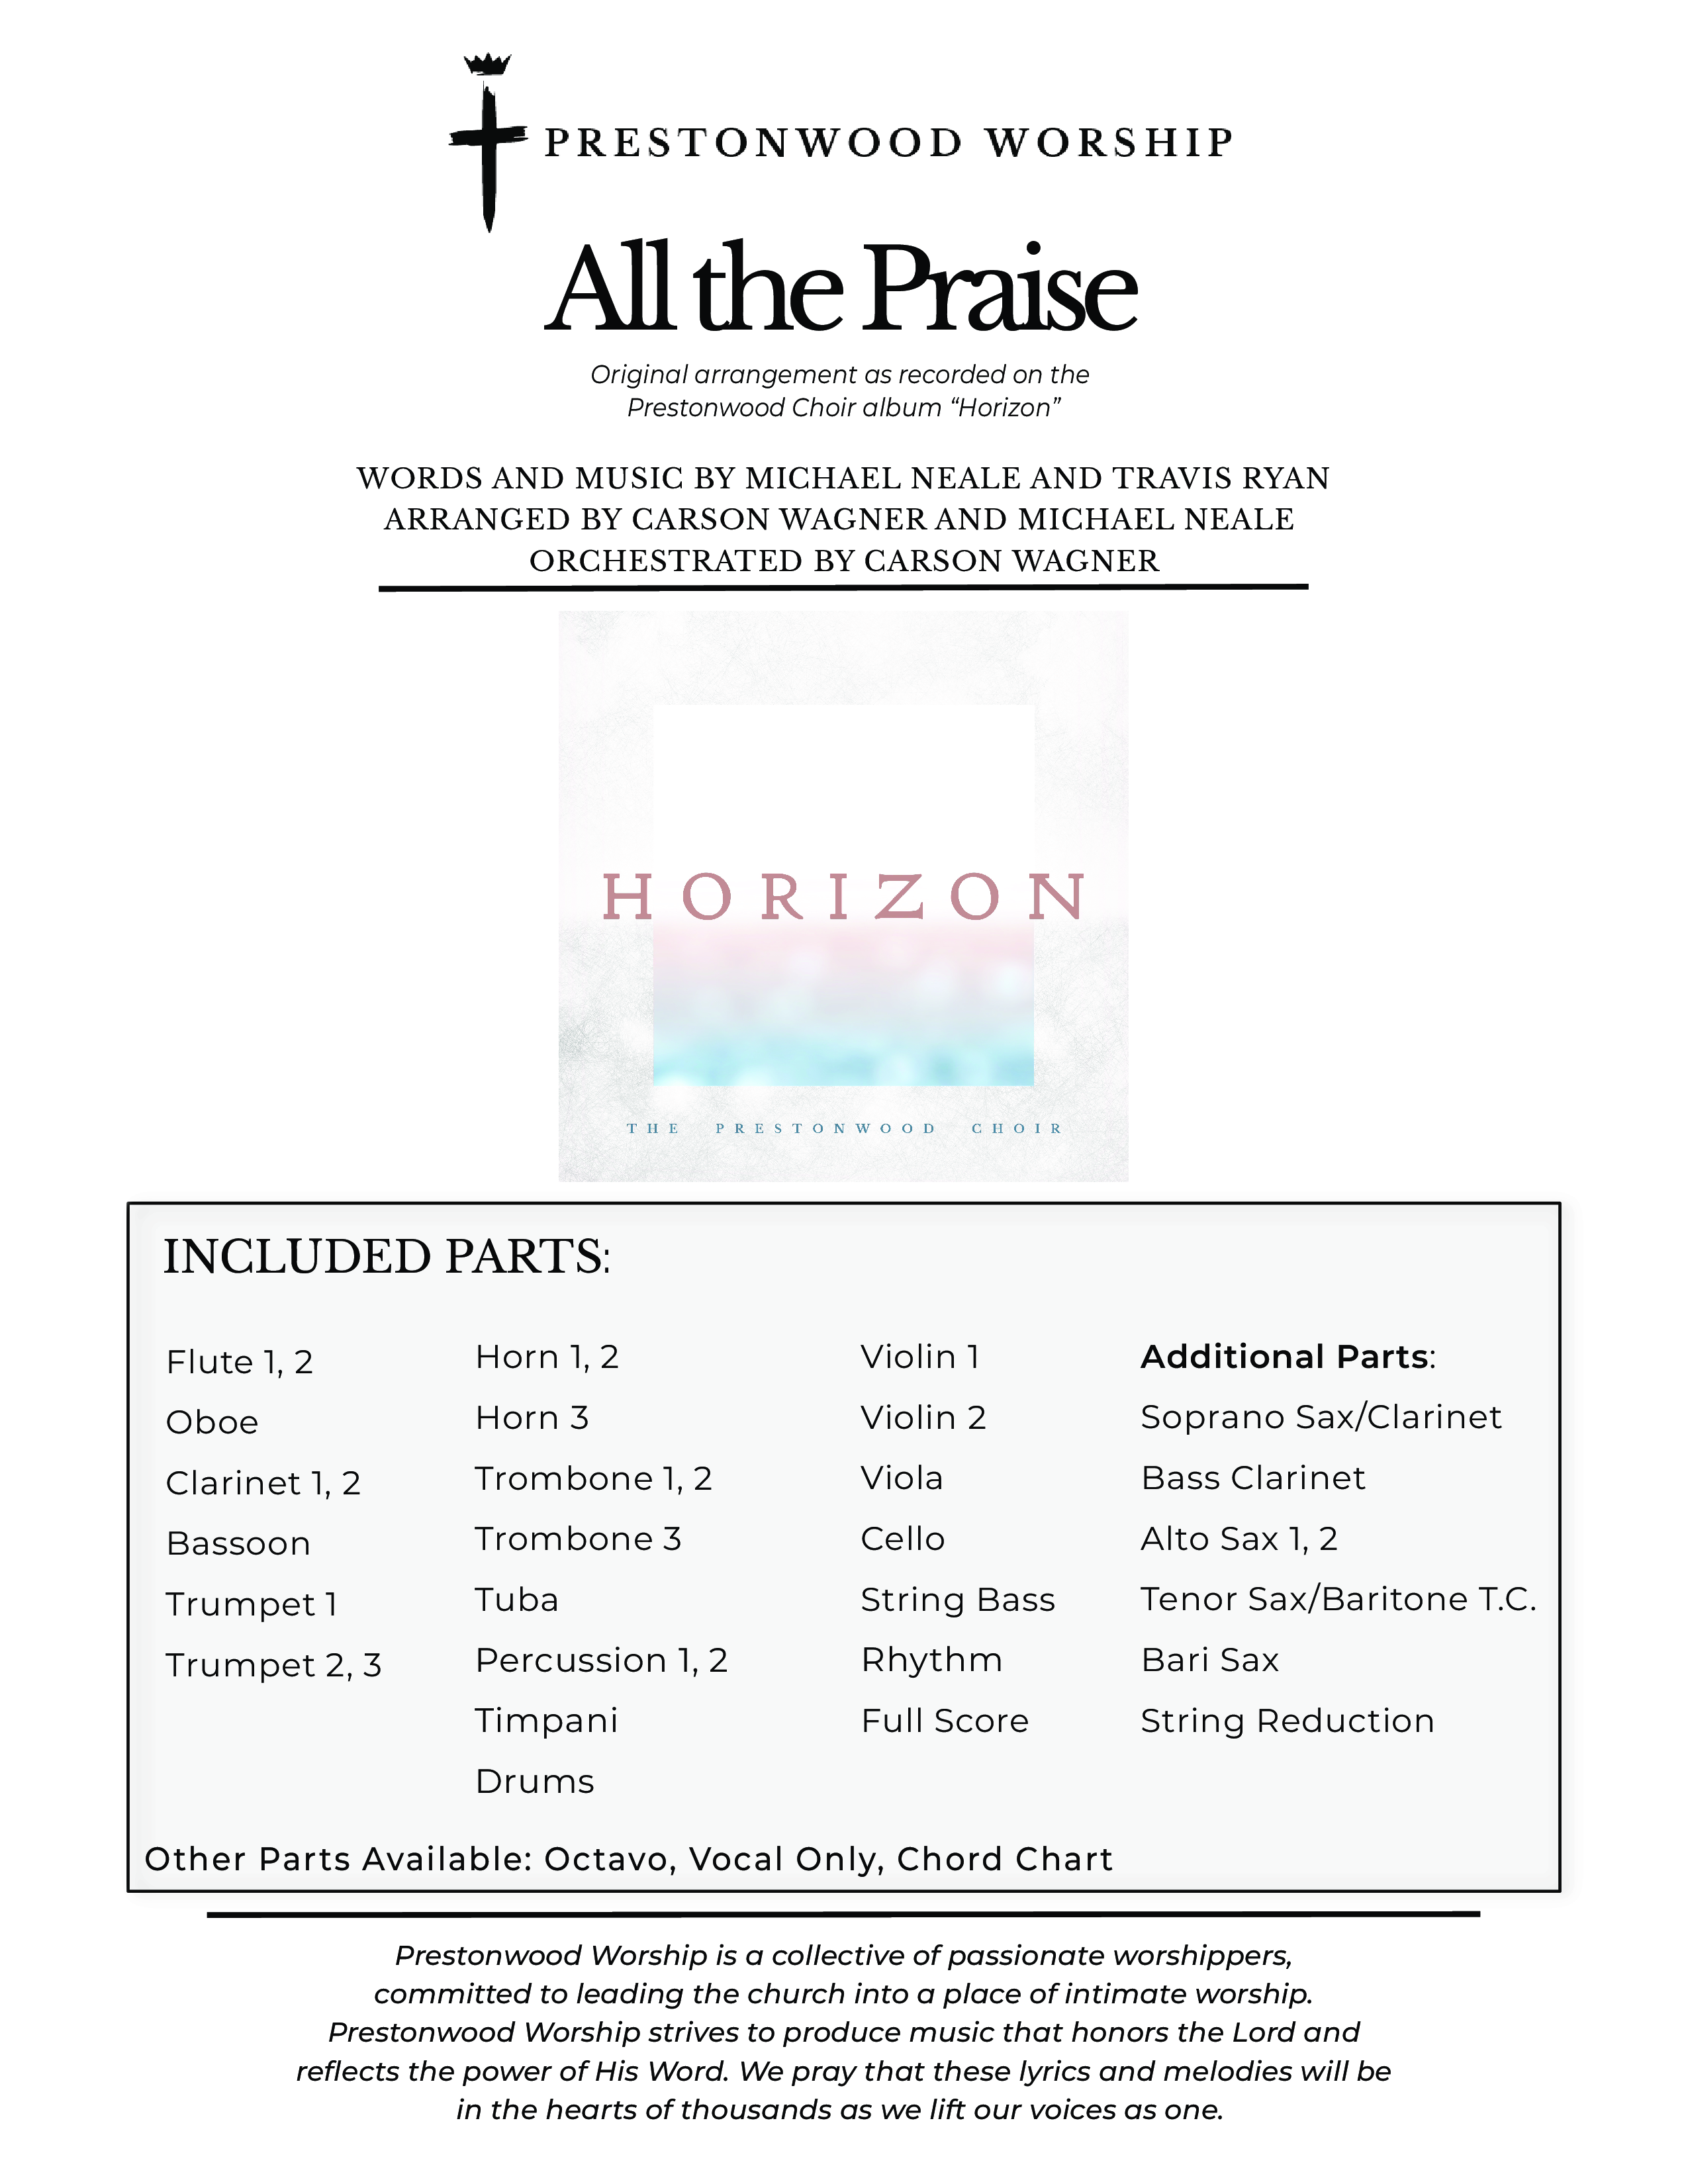 All The Praise (Choral Anthem SATB) Cover Sheet (Prestonwood Worship / Prestonwood Choir / Arr. Michael Neale / Orch. Carson Wagner)